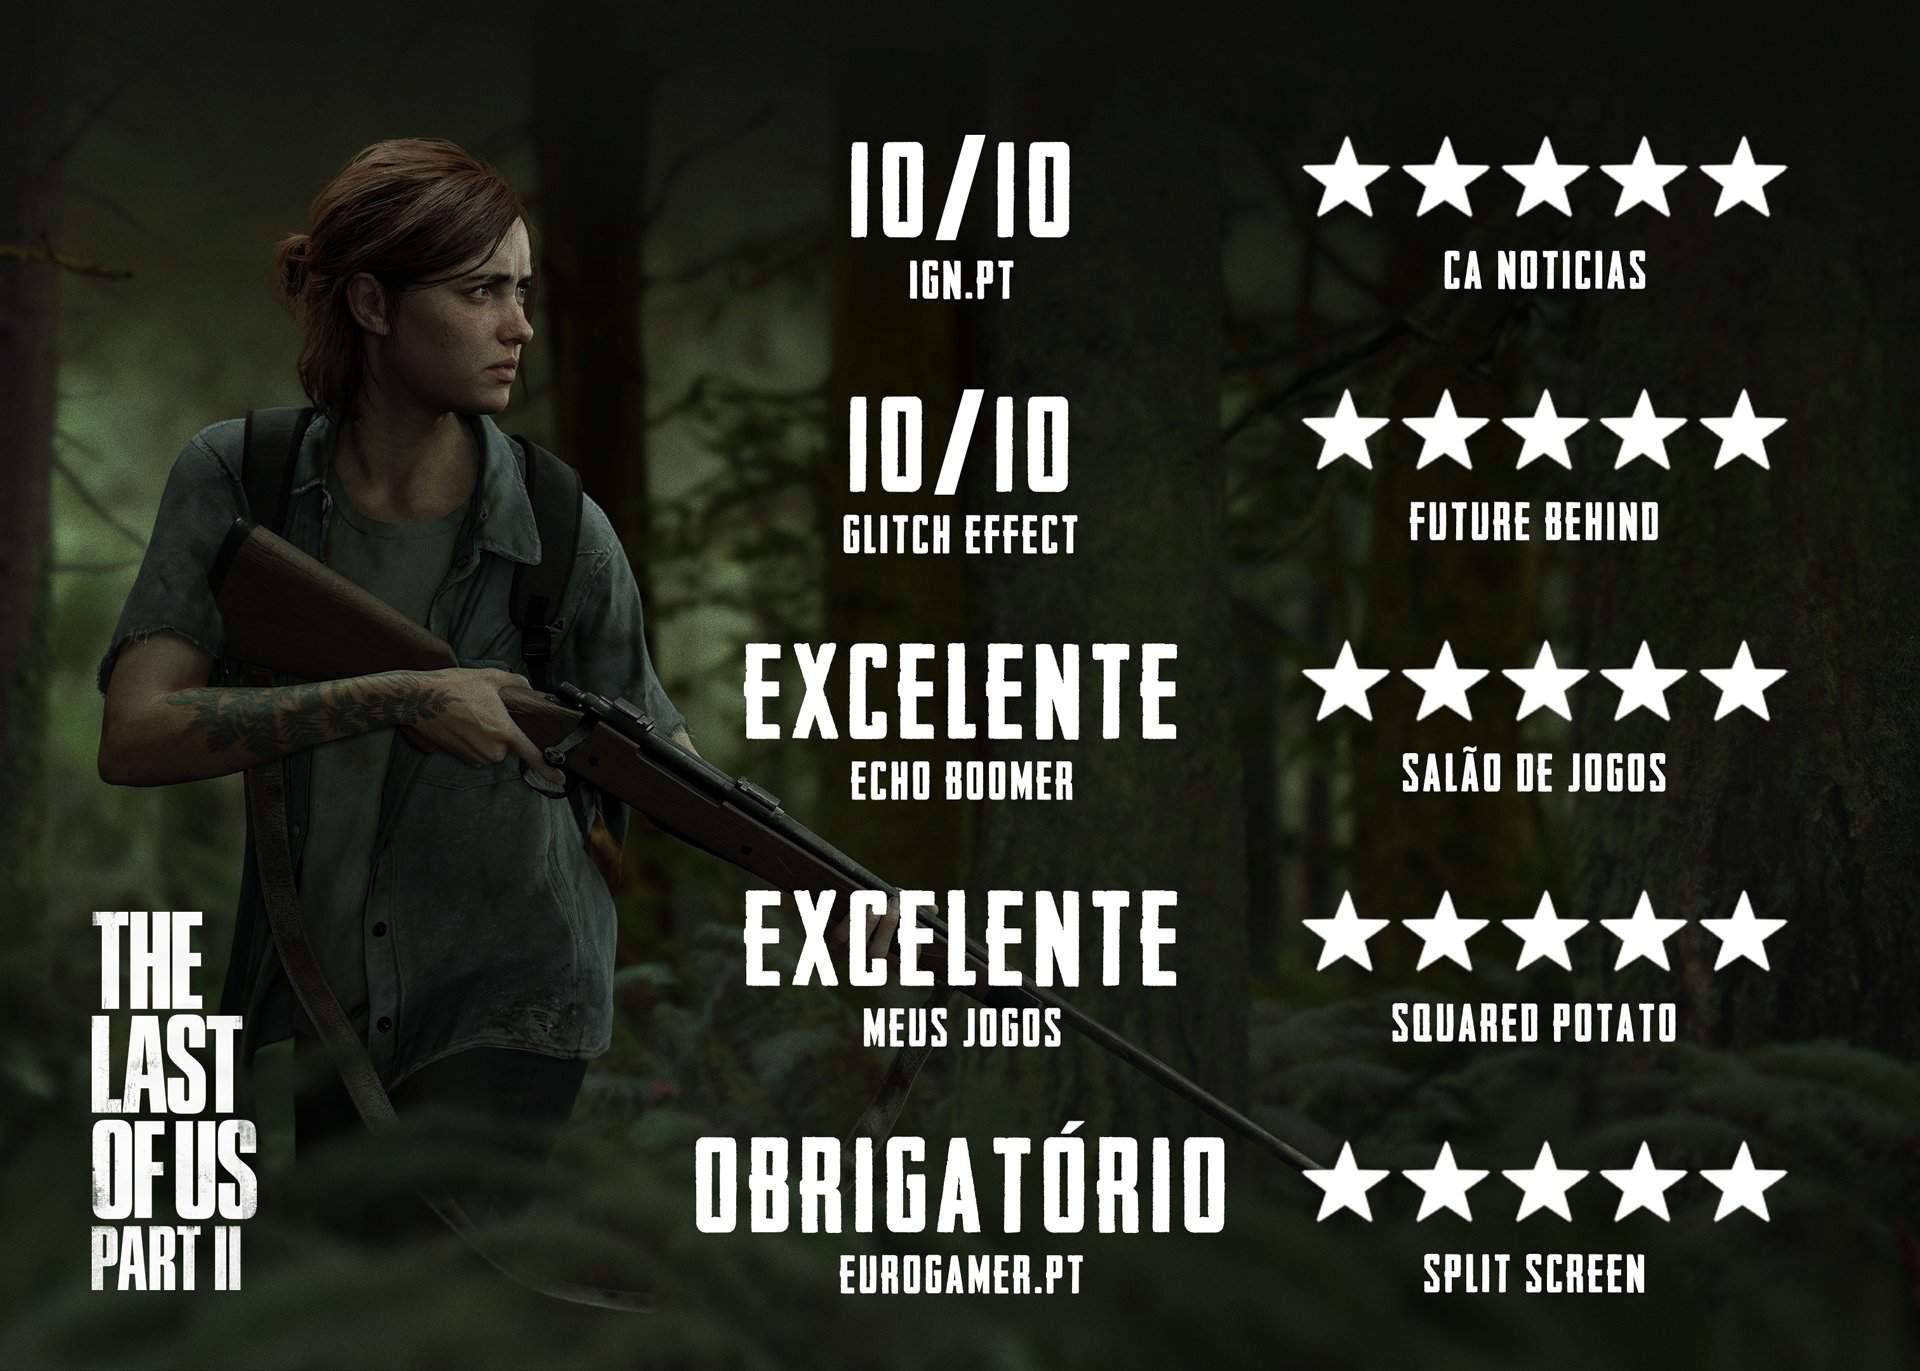 The Last of Us Parte II, O Porquê de The Last of Us Parte II estar a sofrer “Review Bombing”